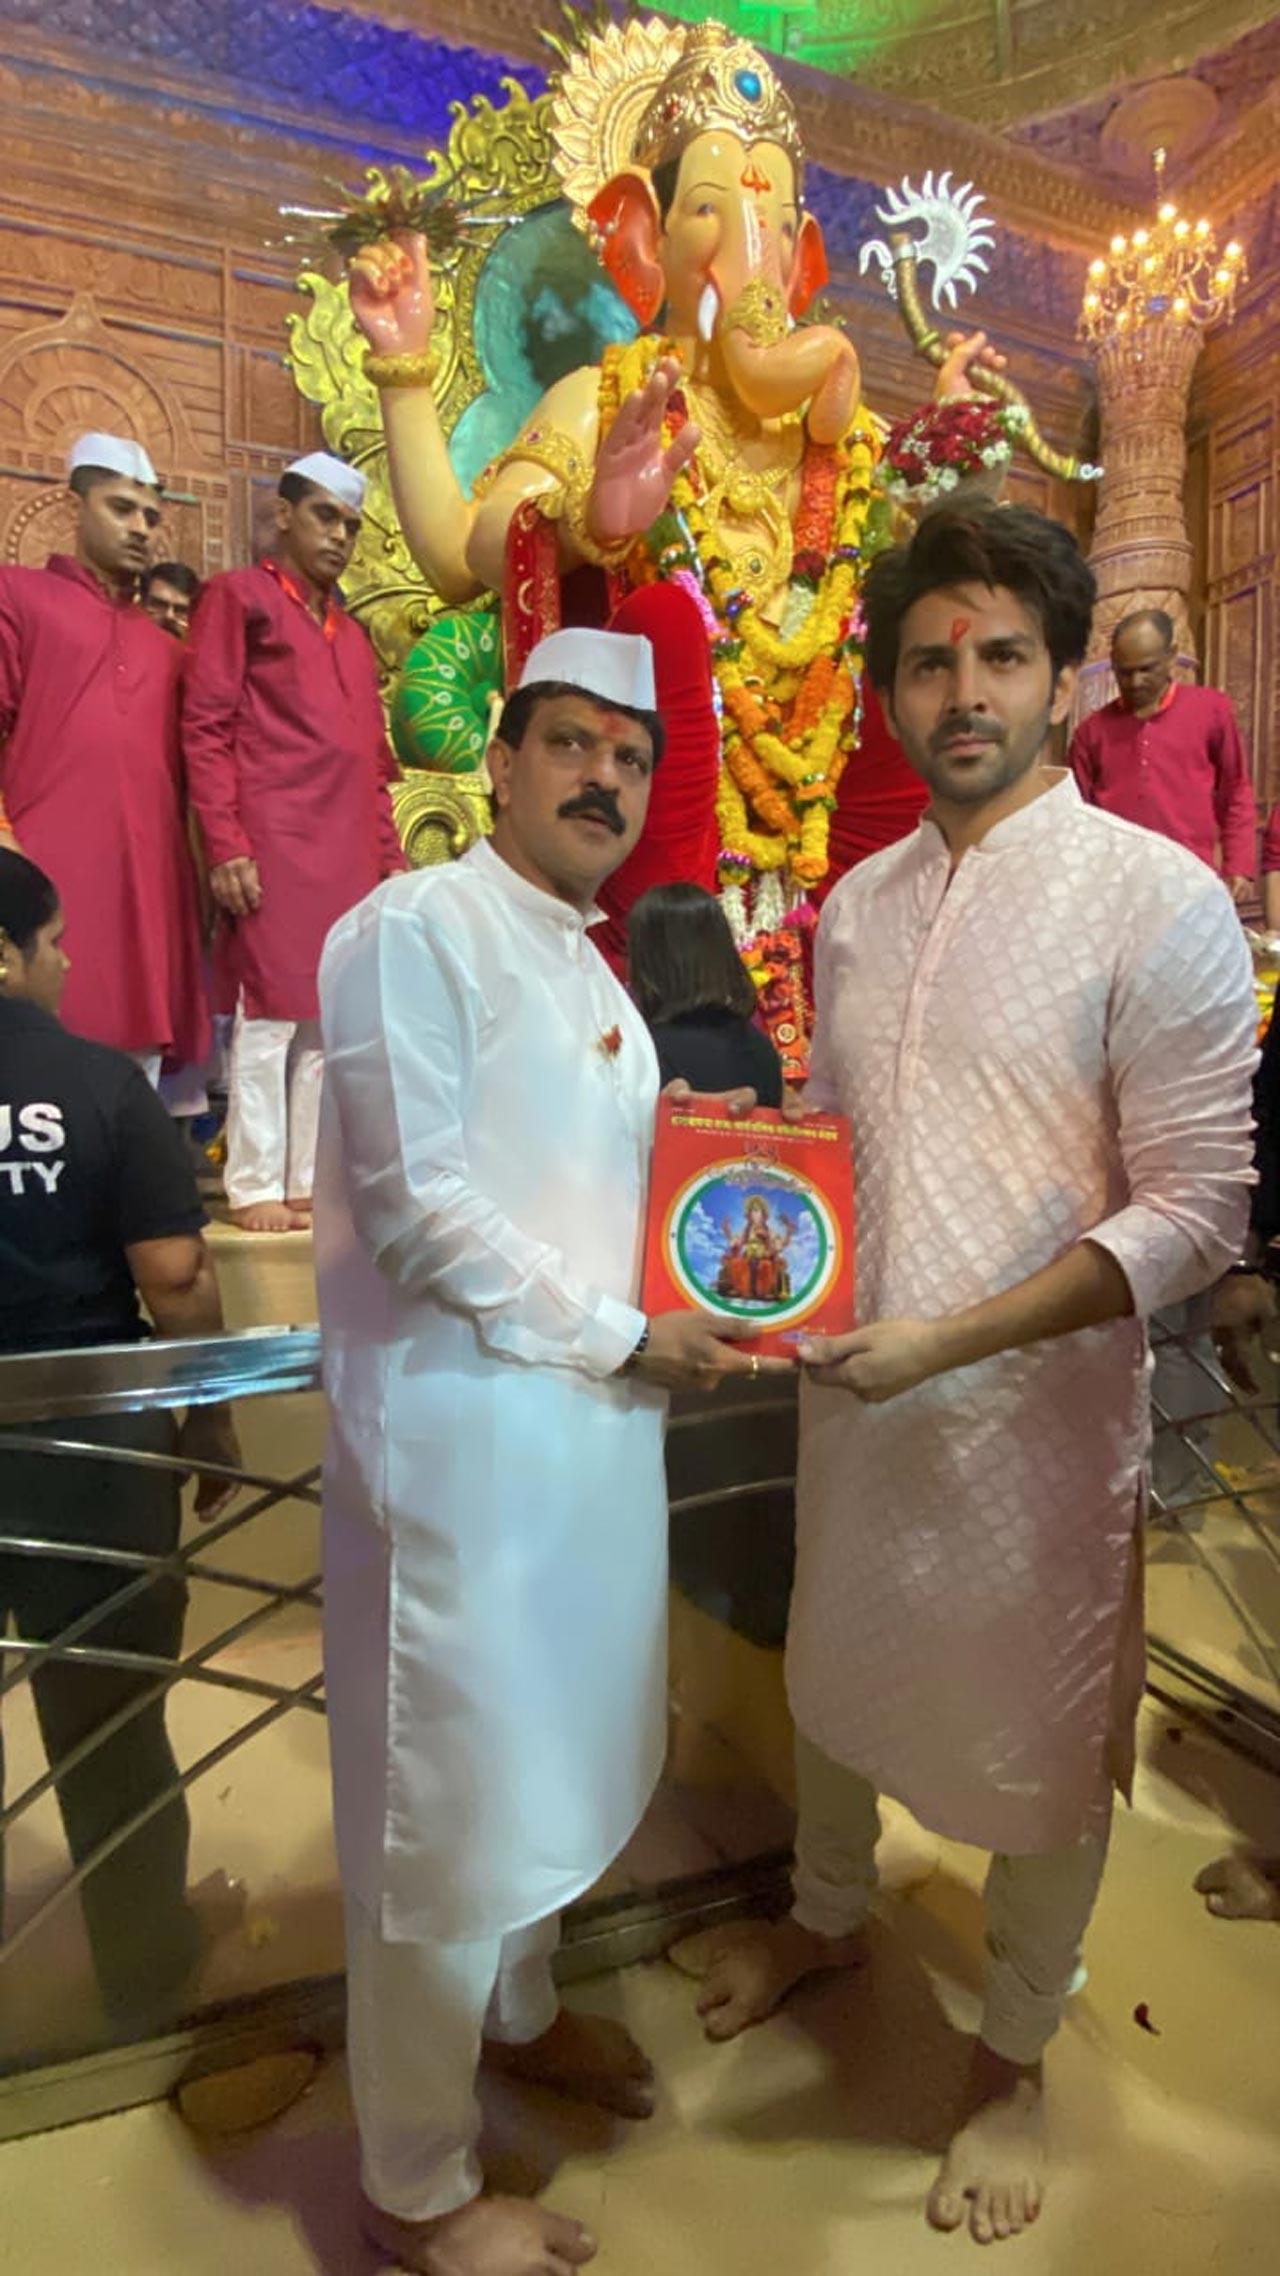 After two years of hiatus, the country is finally celebrating Ganeshotsav on a large scale. Bollywood actor Kartik Aaryan visited Lalbaugcha Raja on Vinayak Chaturthi